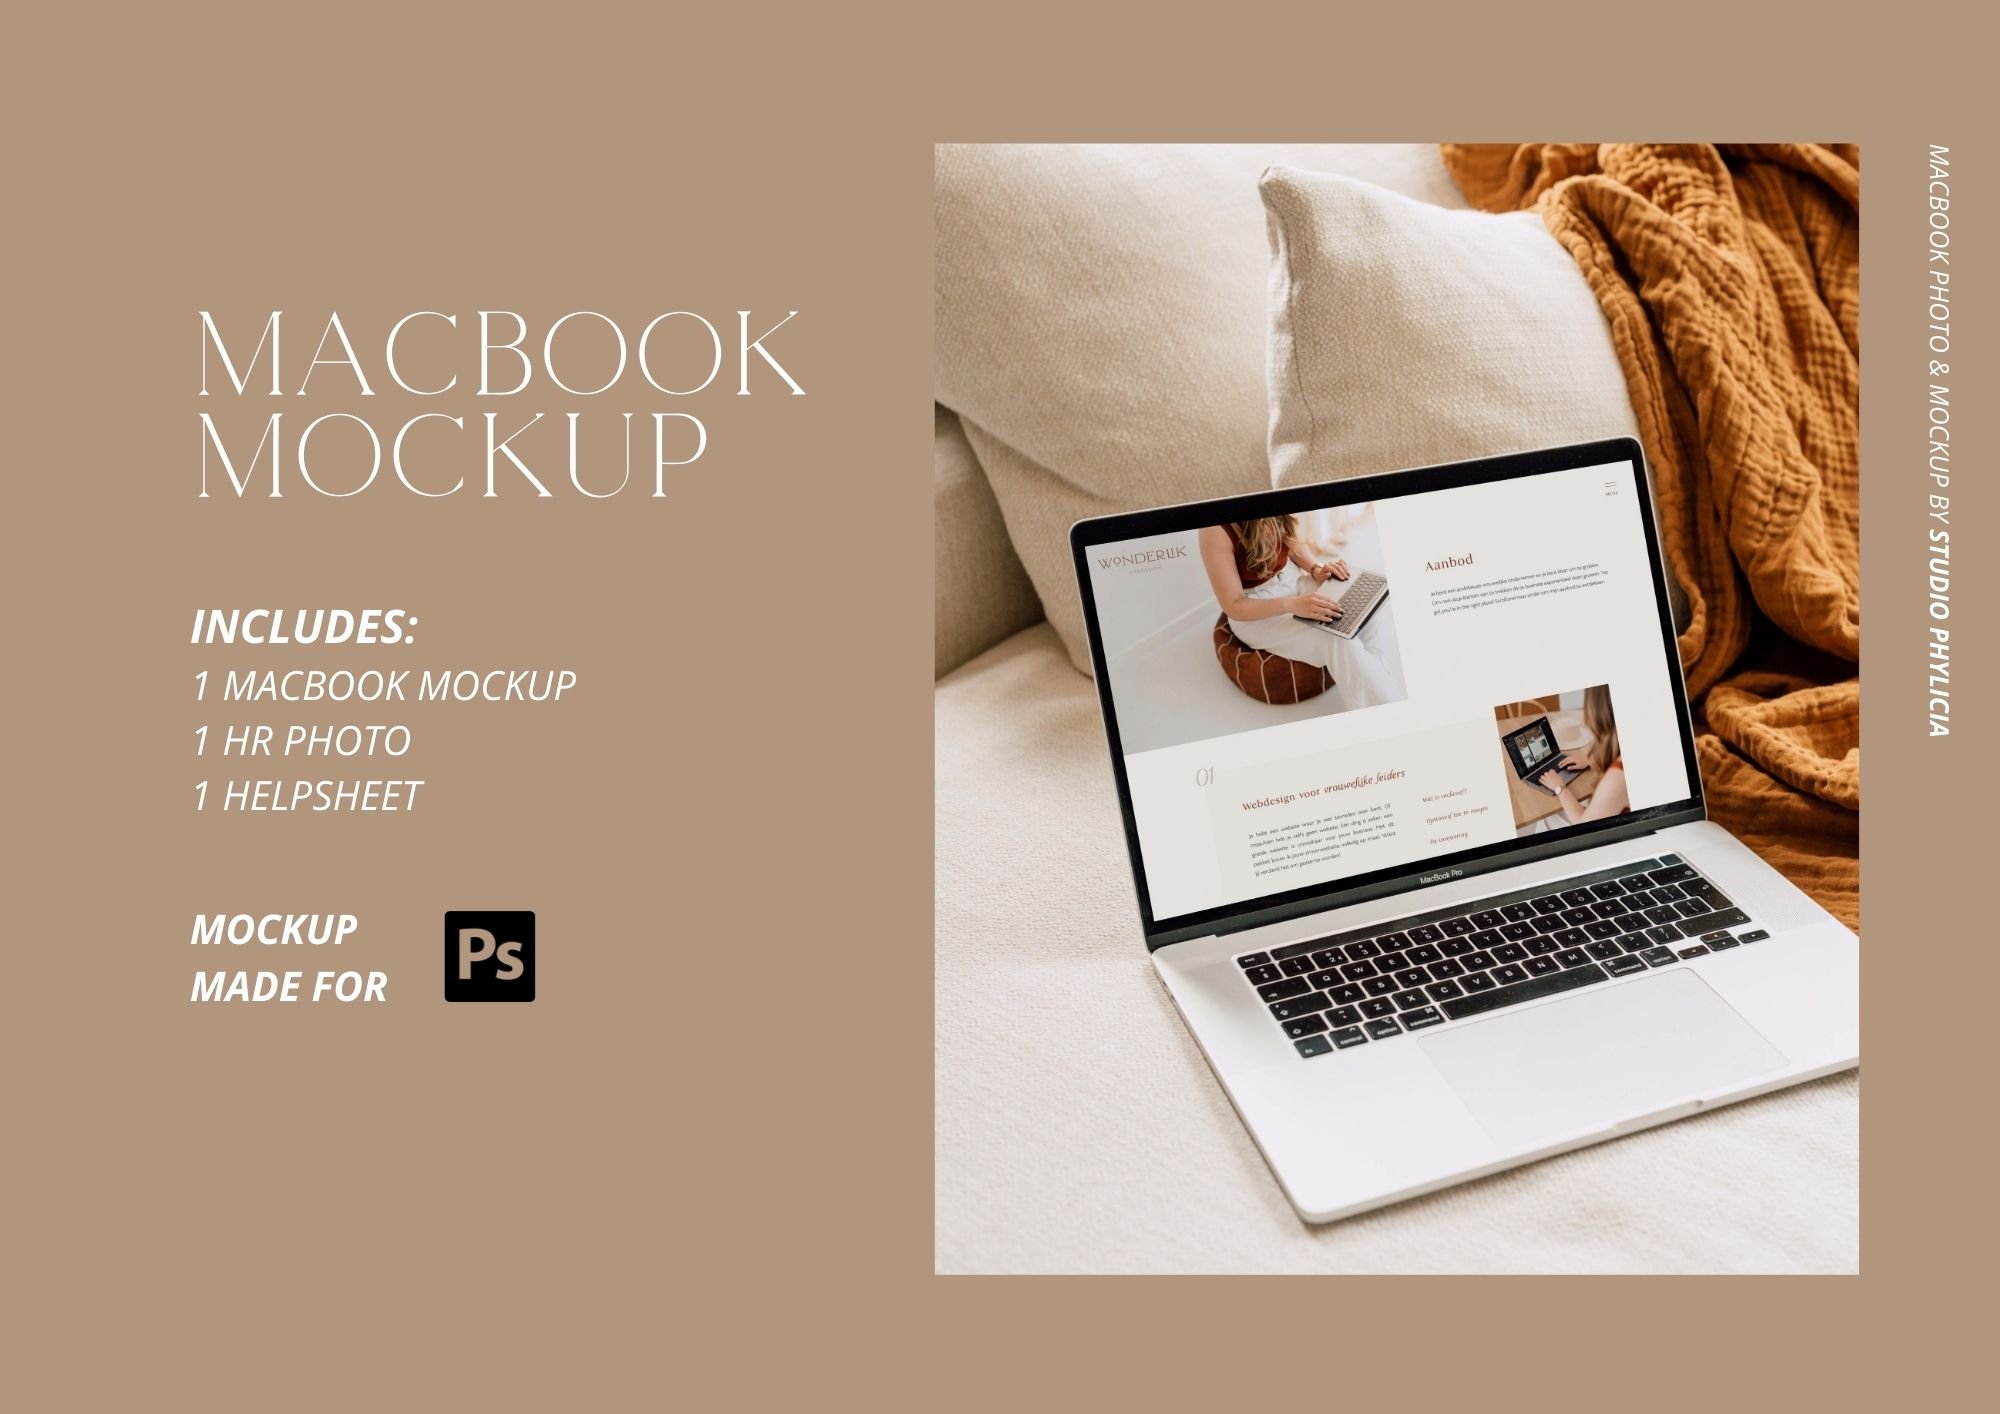 Macbook Mockup, RUBY 16 cover image.